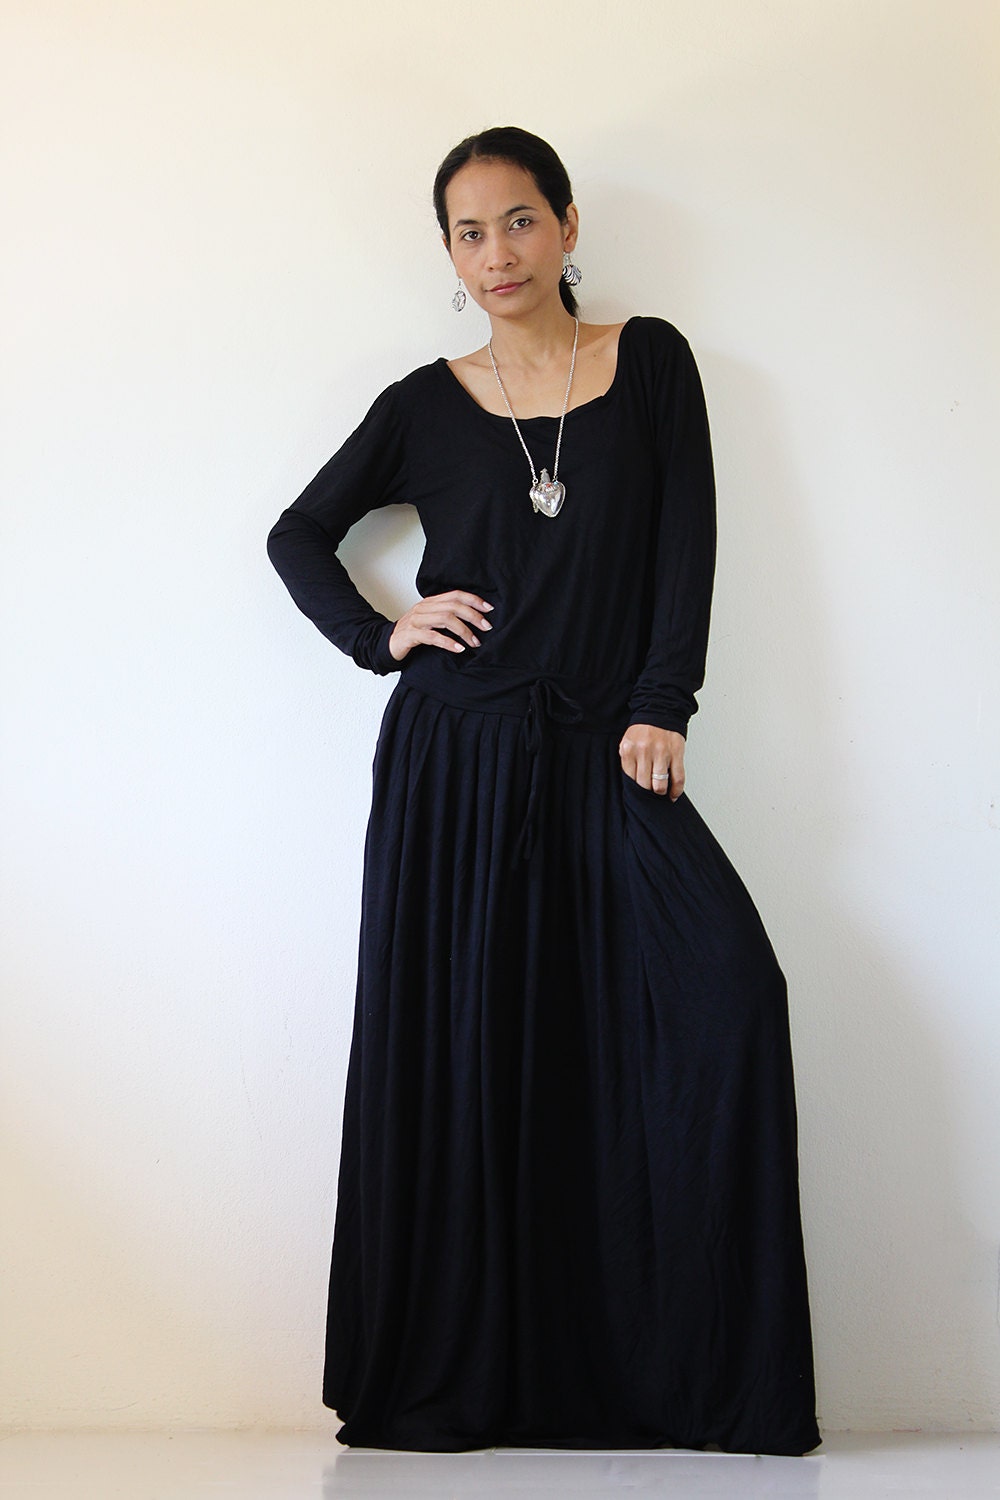 PLUS SIZE Black Maxi Dress Long Sleeve dress : Autumn